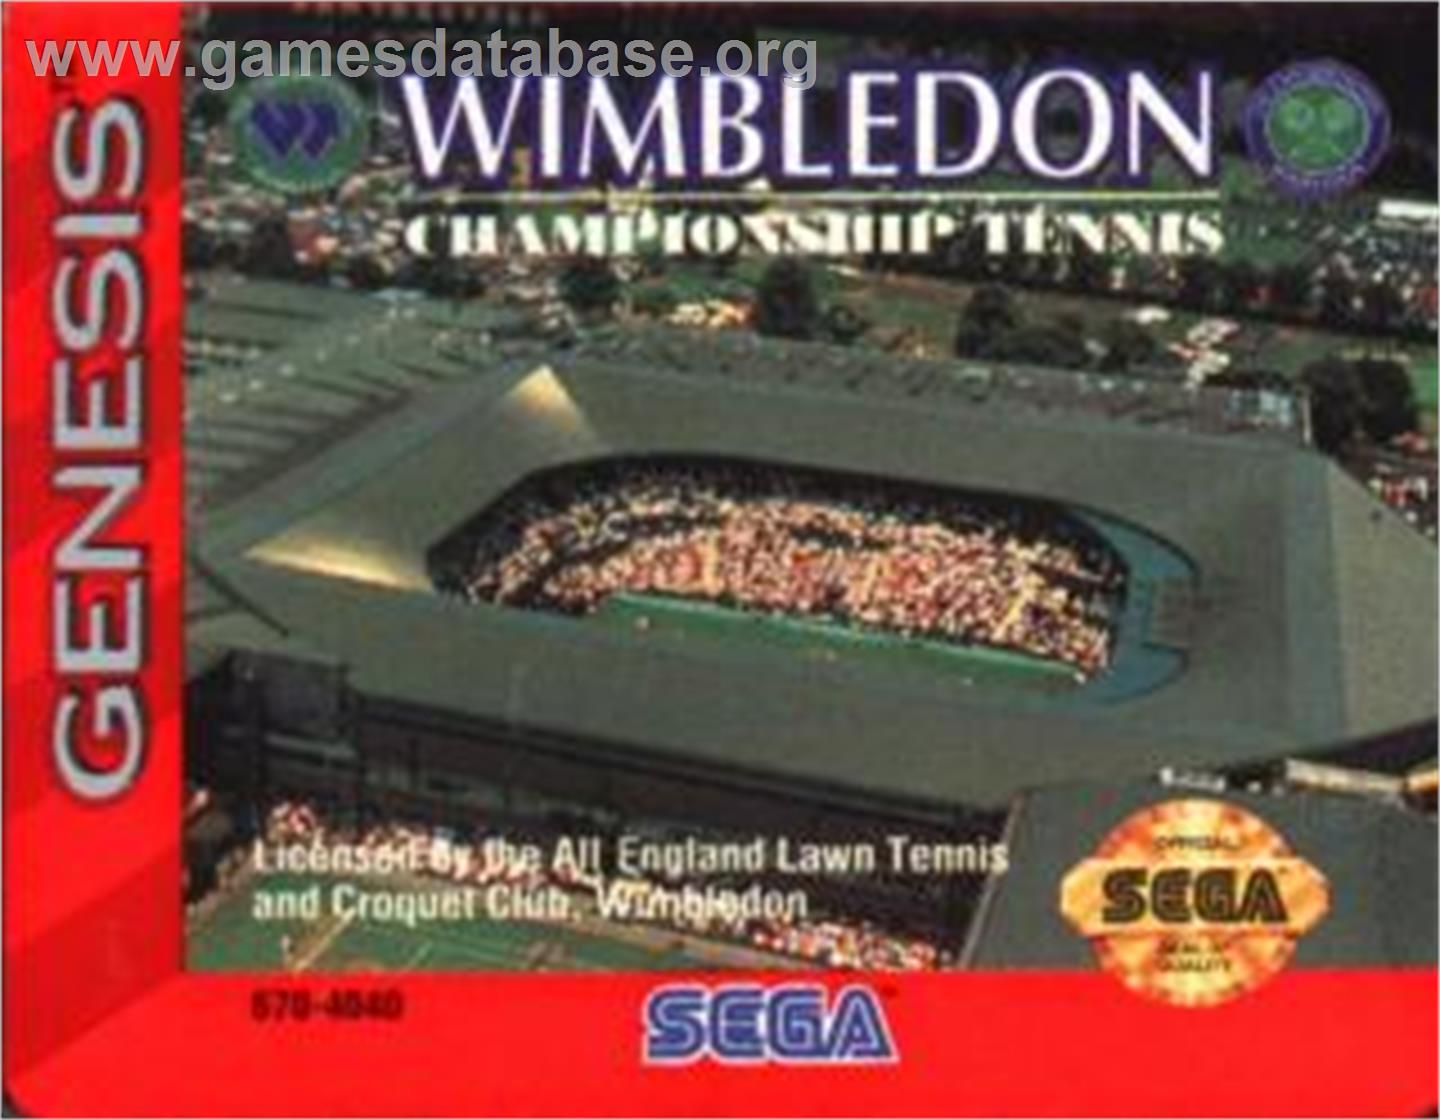 Wimbledon Championship Tennis - Sega Nomad - Artwork - Cartridge